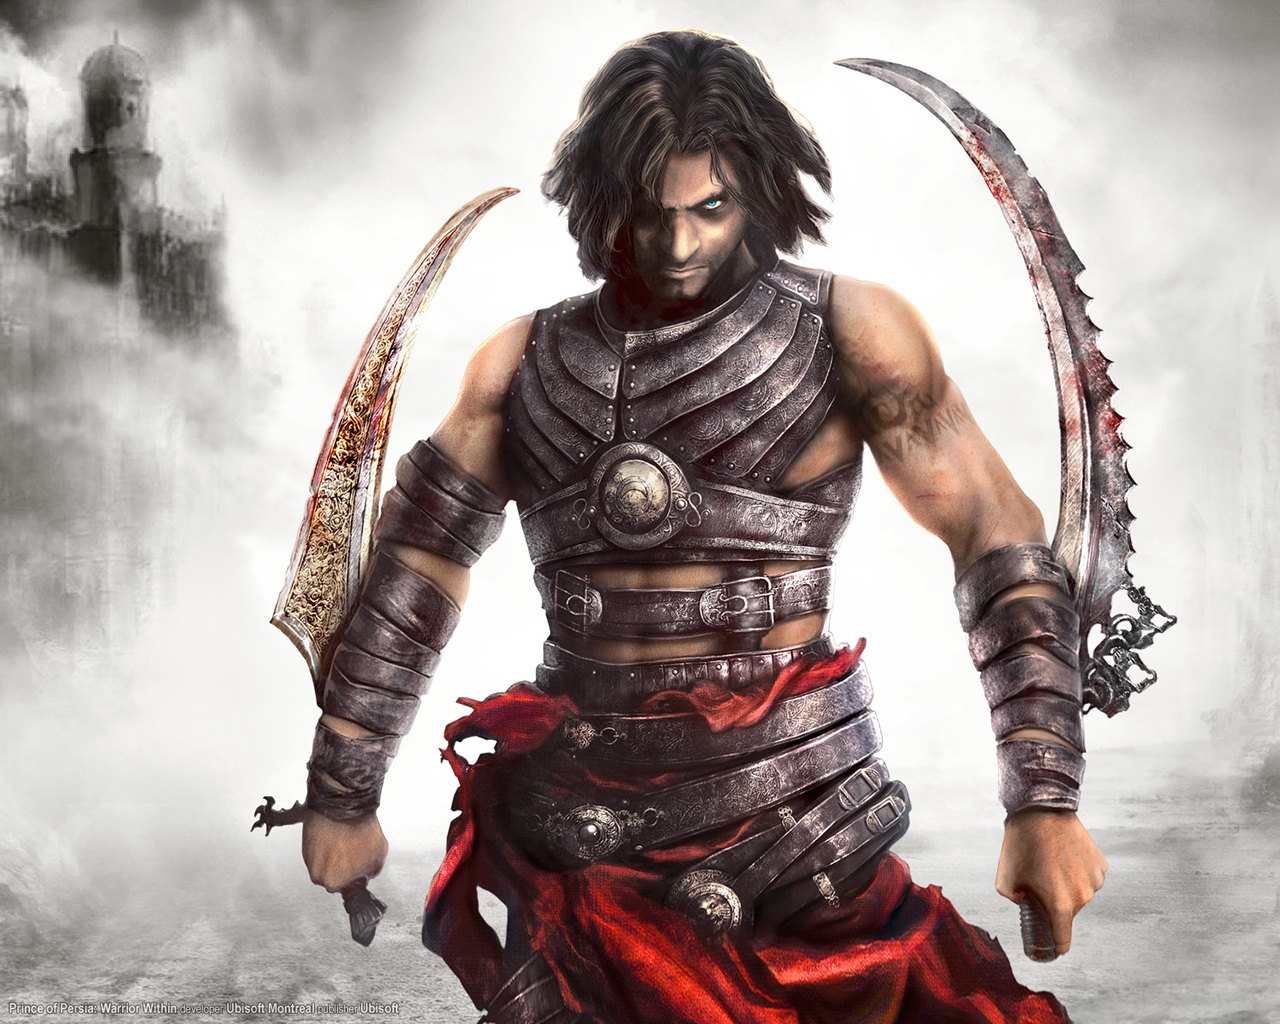 "Prince of Persia: Warrior Within (Video Game)" desktop wallpaper (1280 x 1024 pixels)